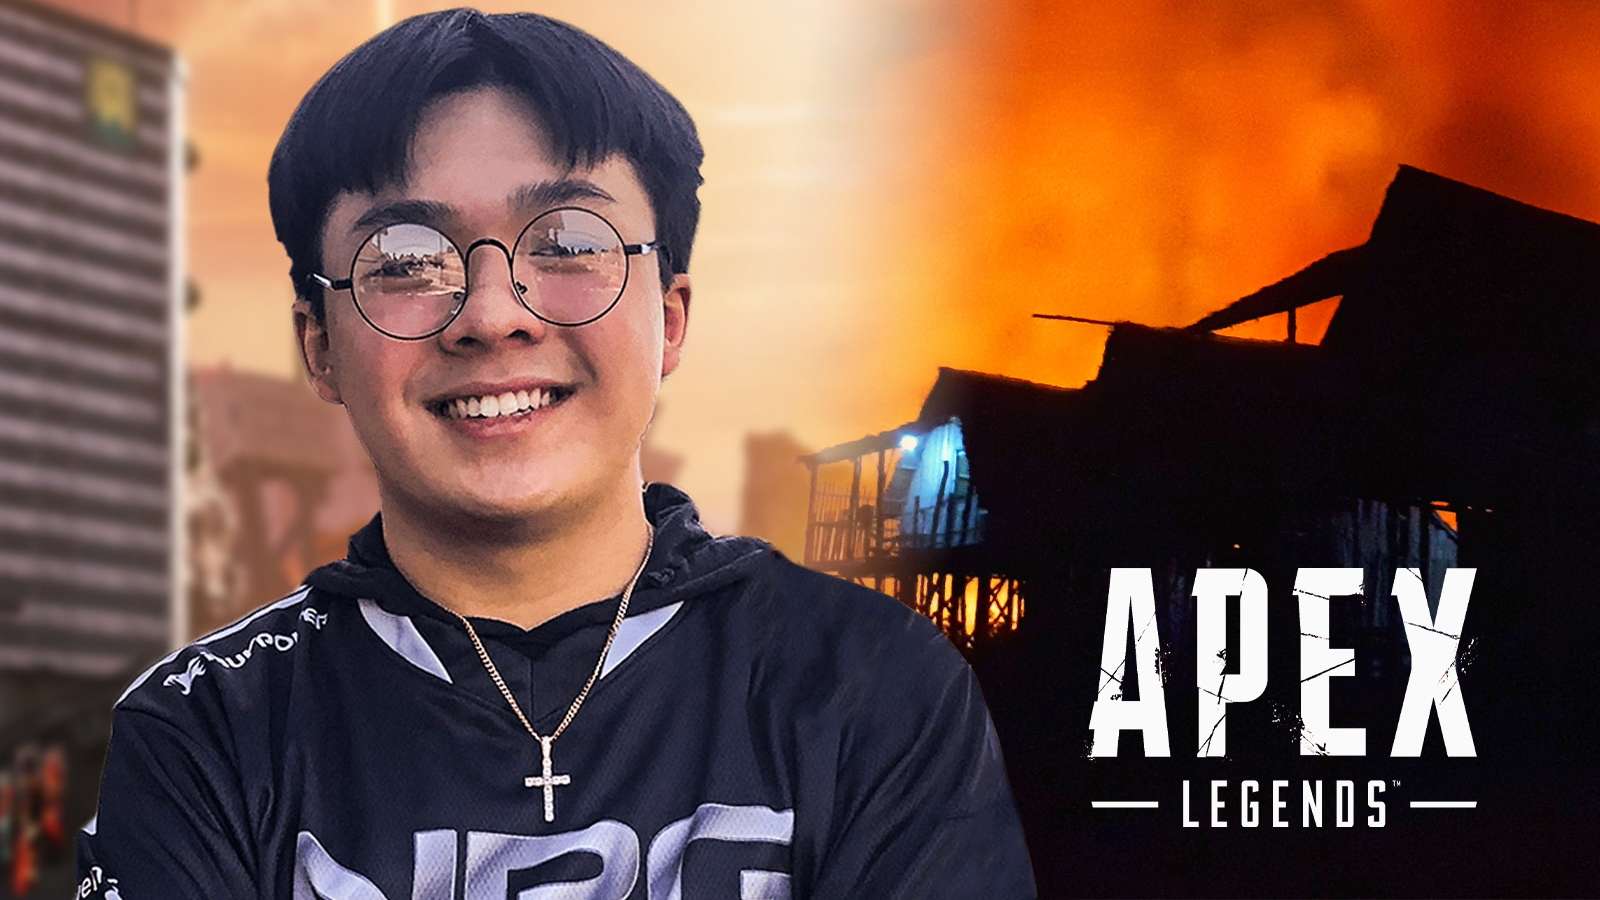 Apex Legends pro for NRG nafen standing in front of burning house